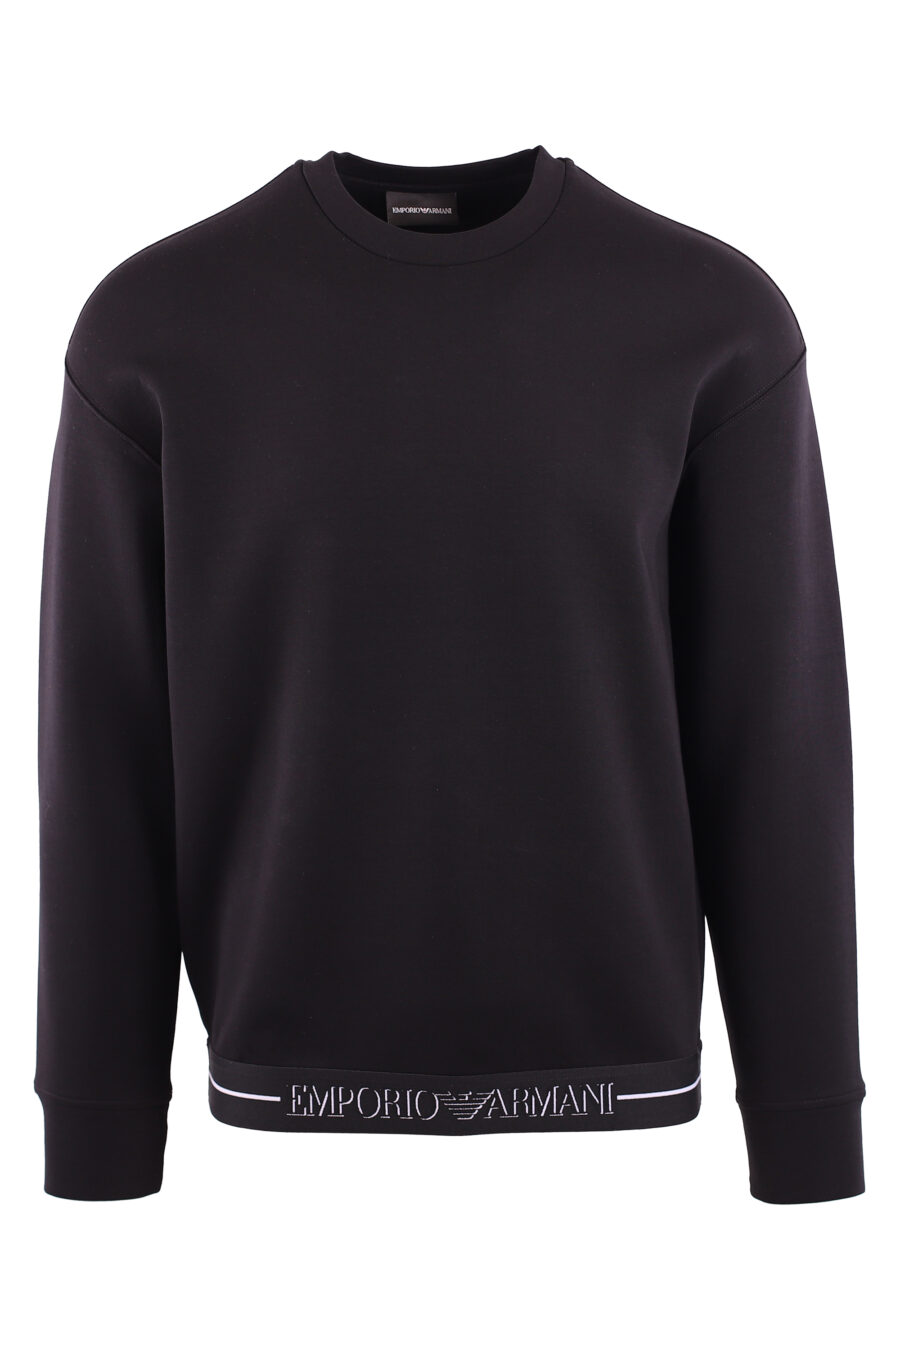 Black sweatshirt with ribbon logo - IMG 2816